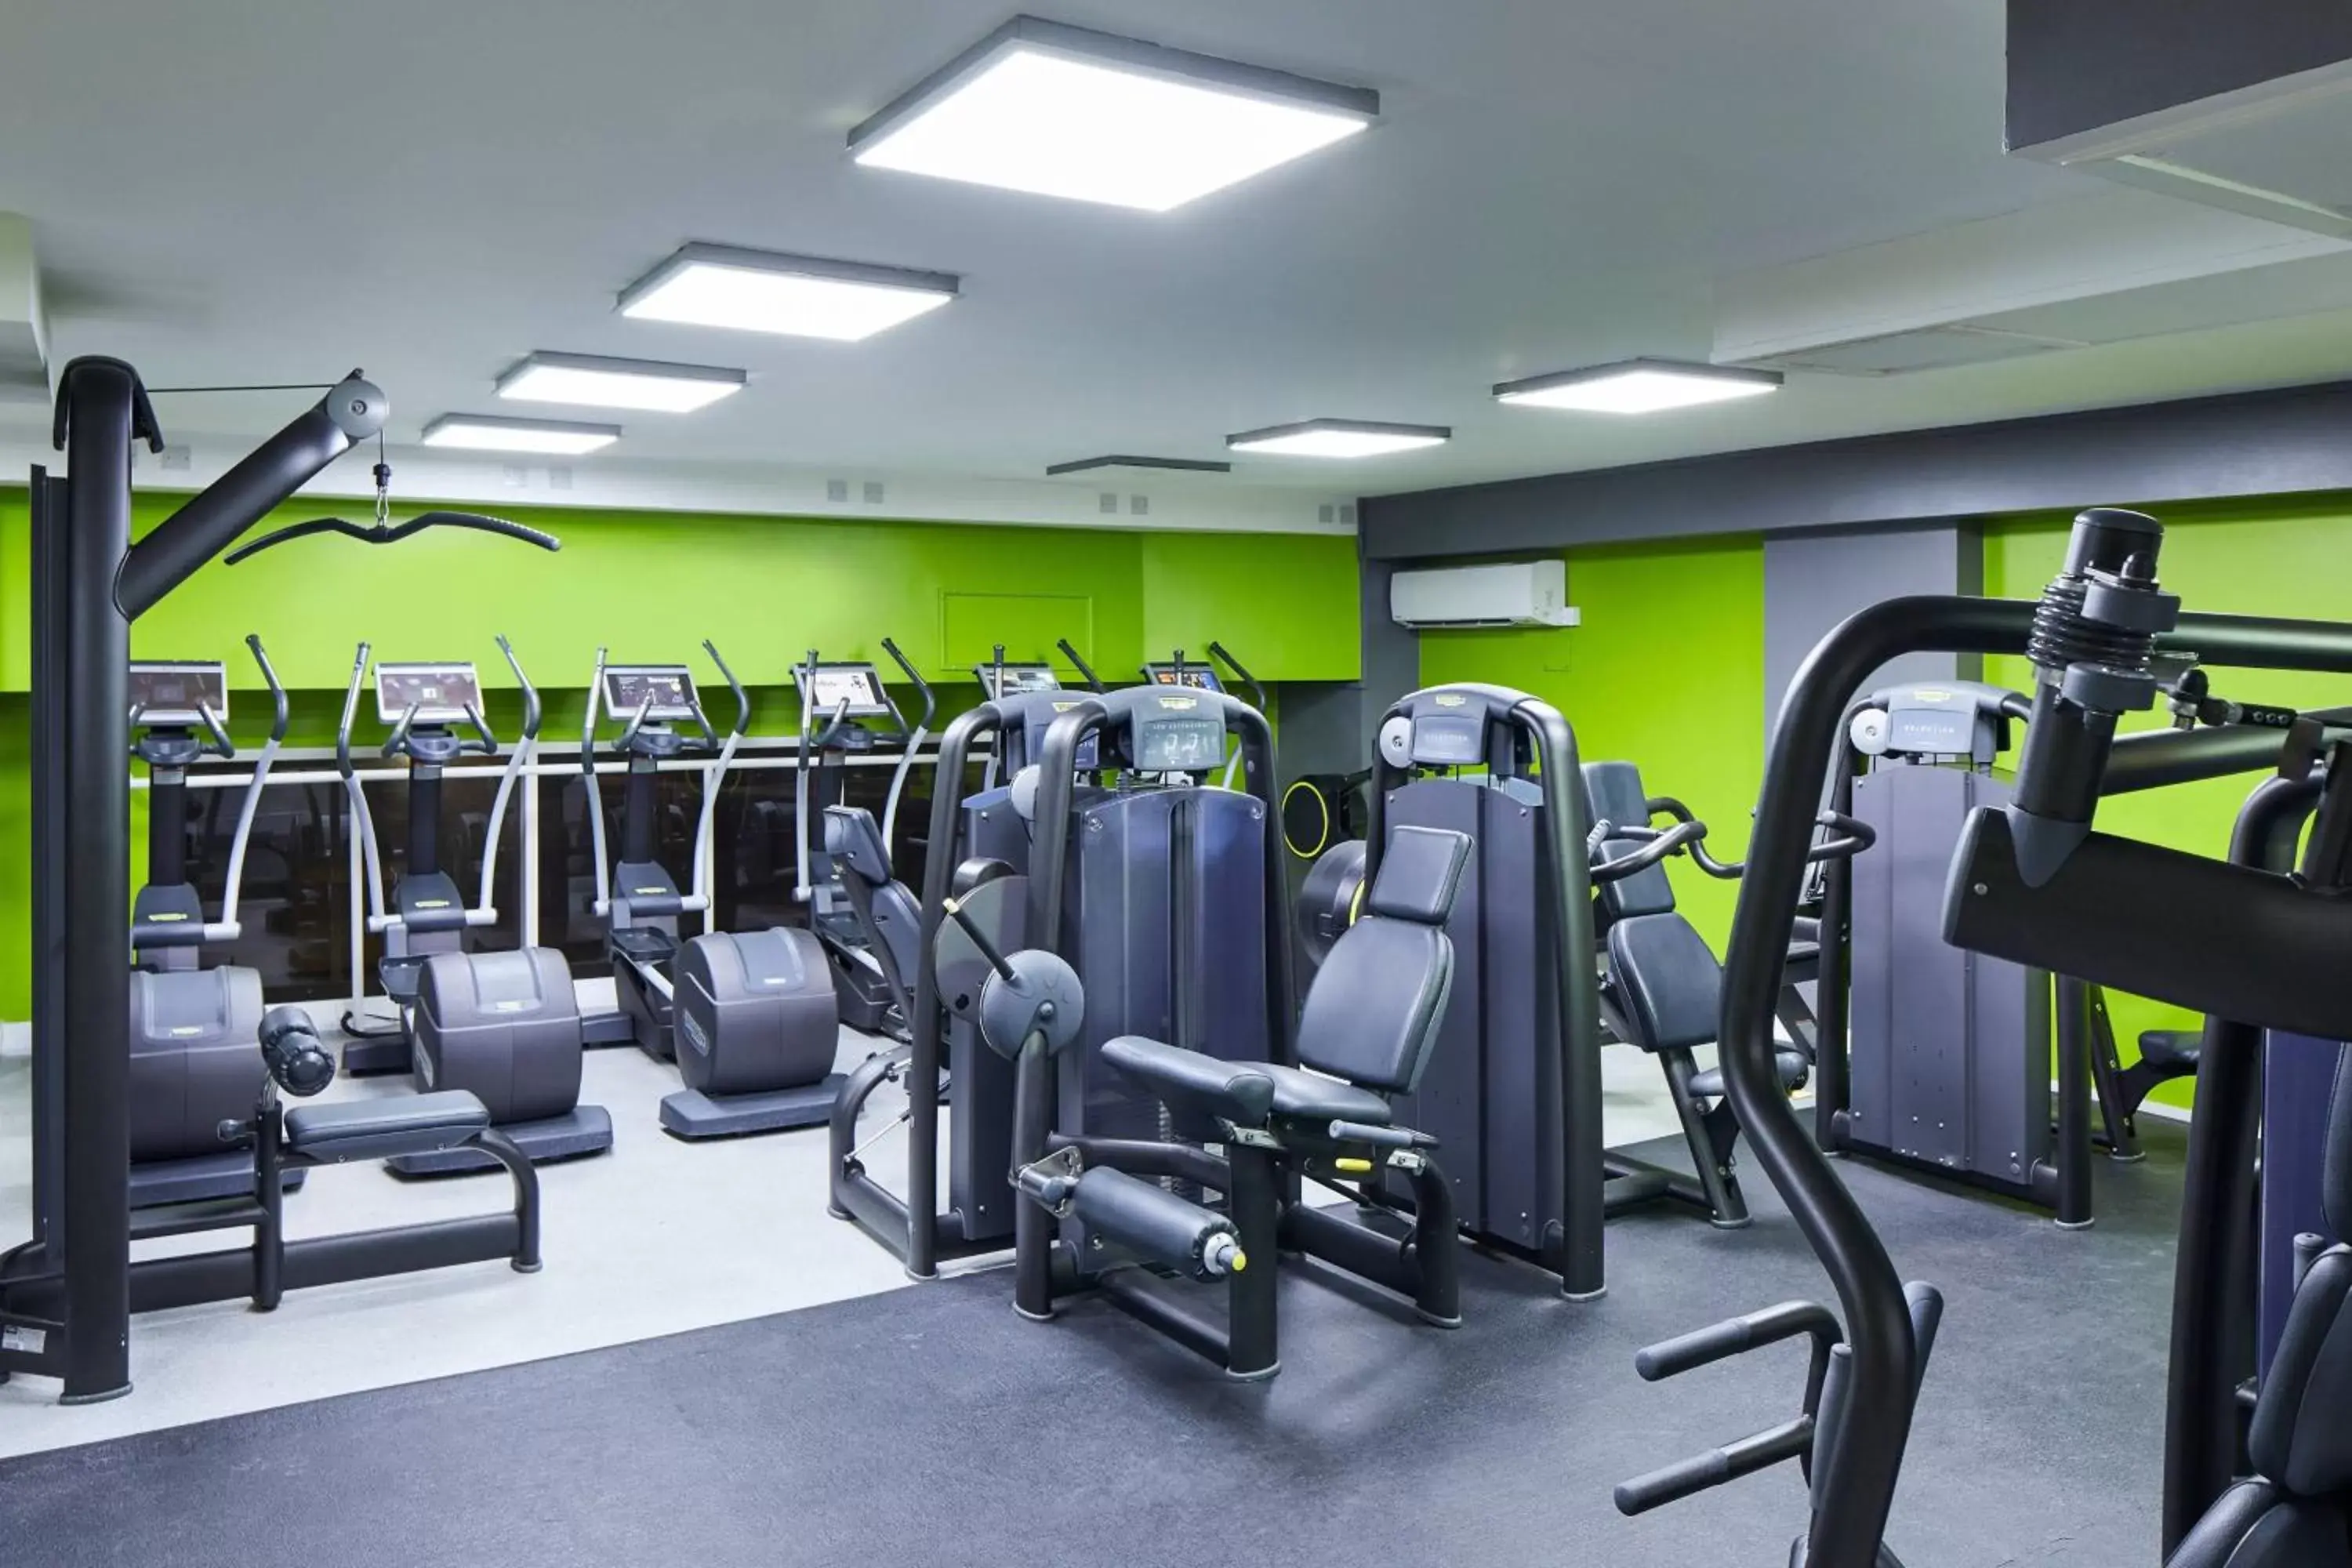 Fitness centre/facilities, Fitness Center/Facilities in London Marriott Hotel Maida Vale